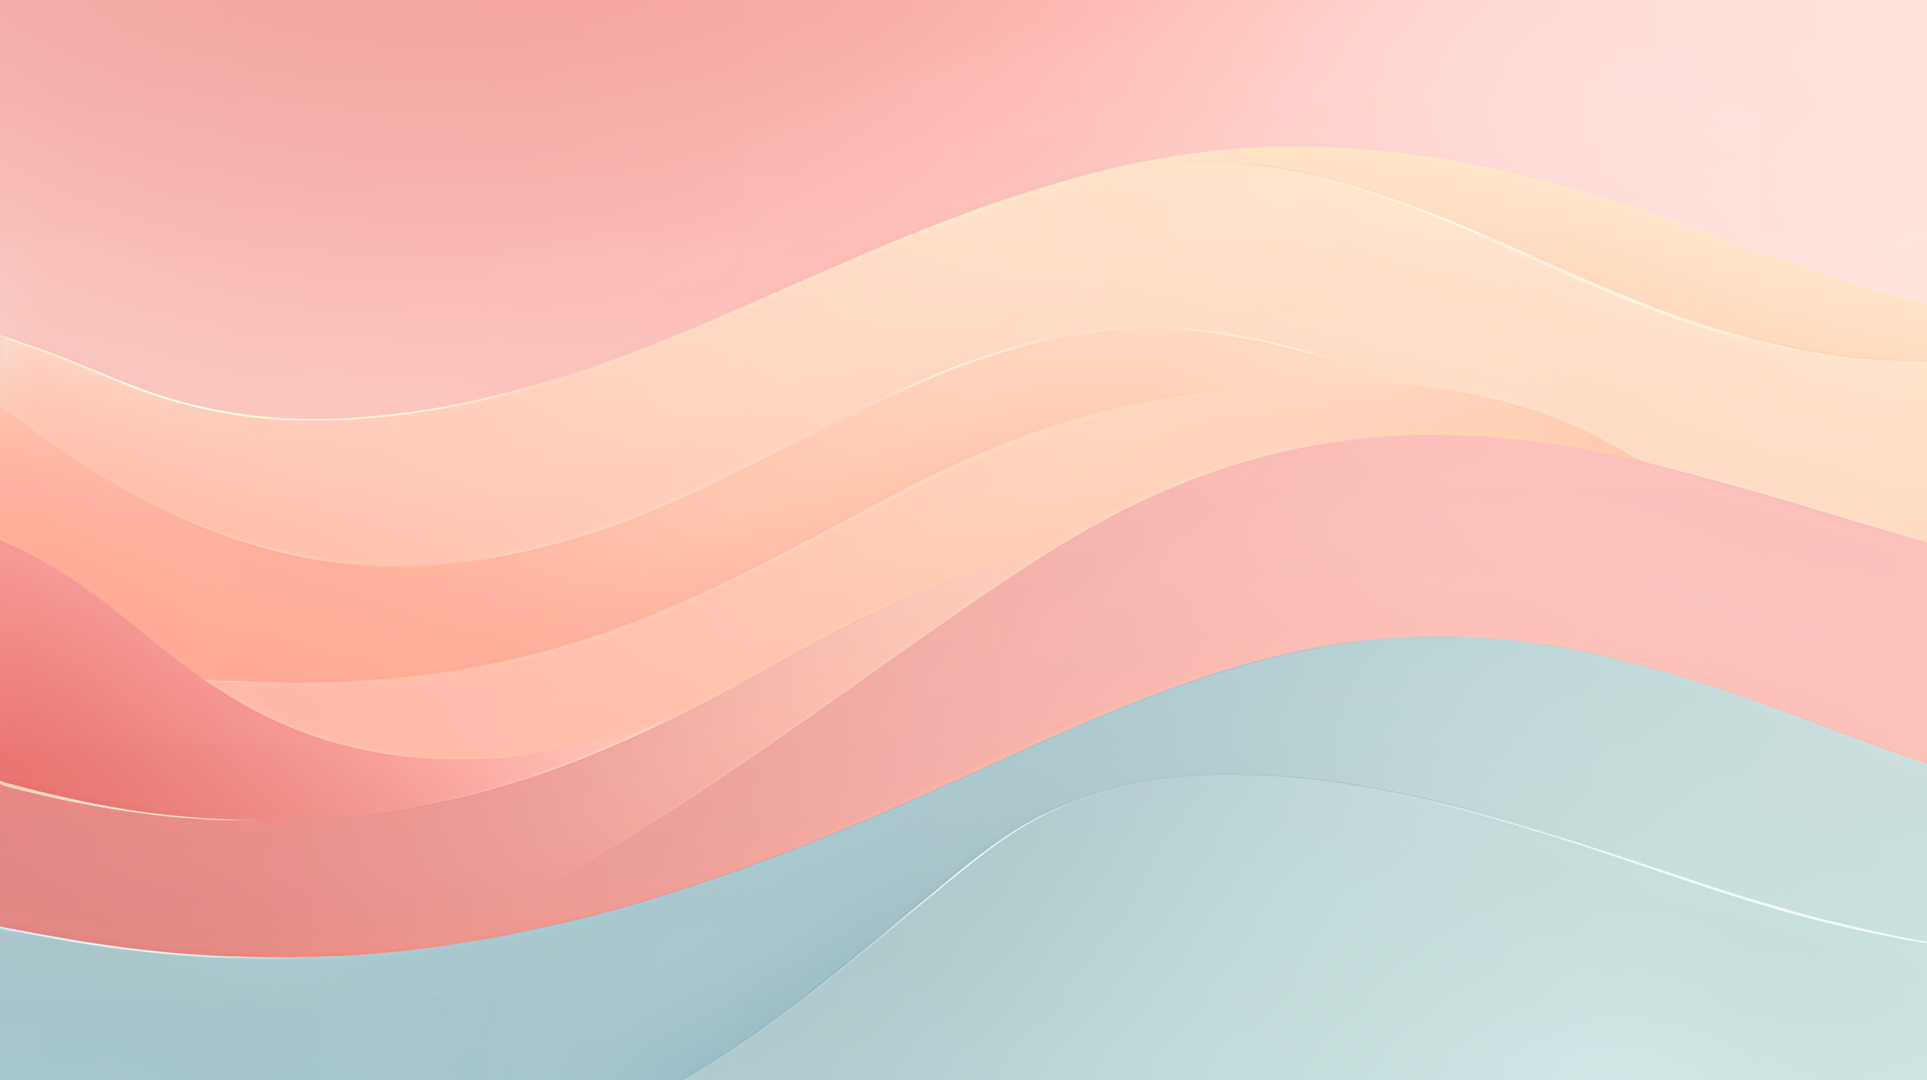 Free customizable pastel desktop wallpaper templates | Canva